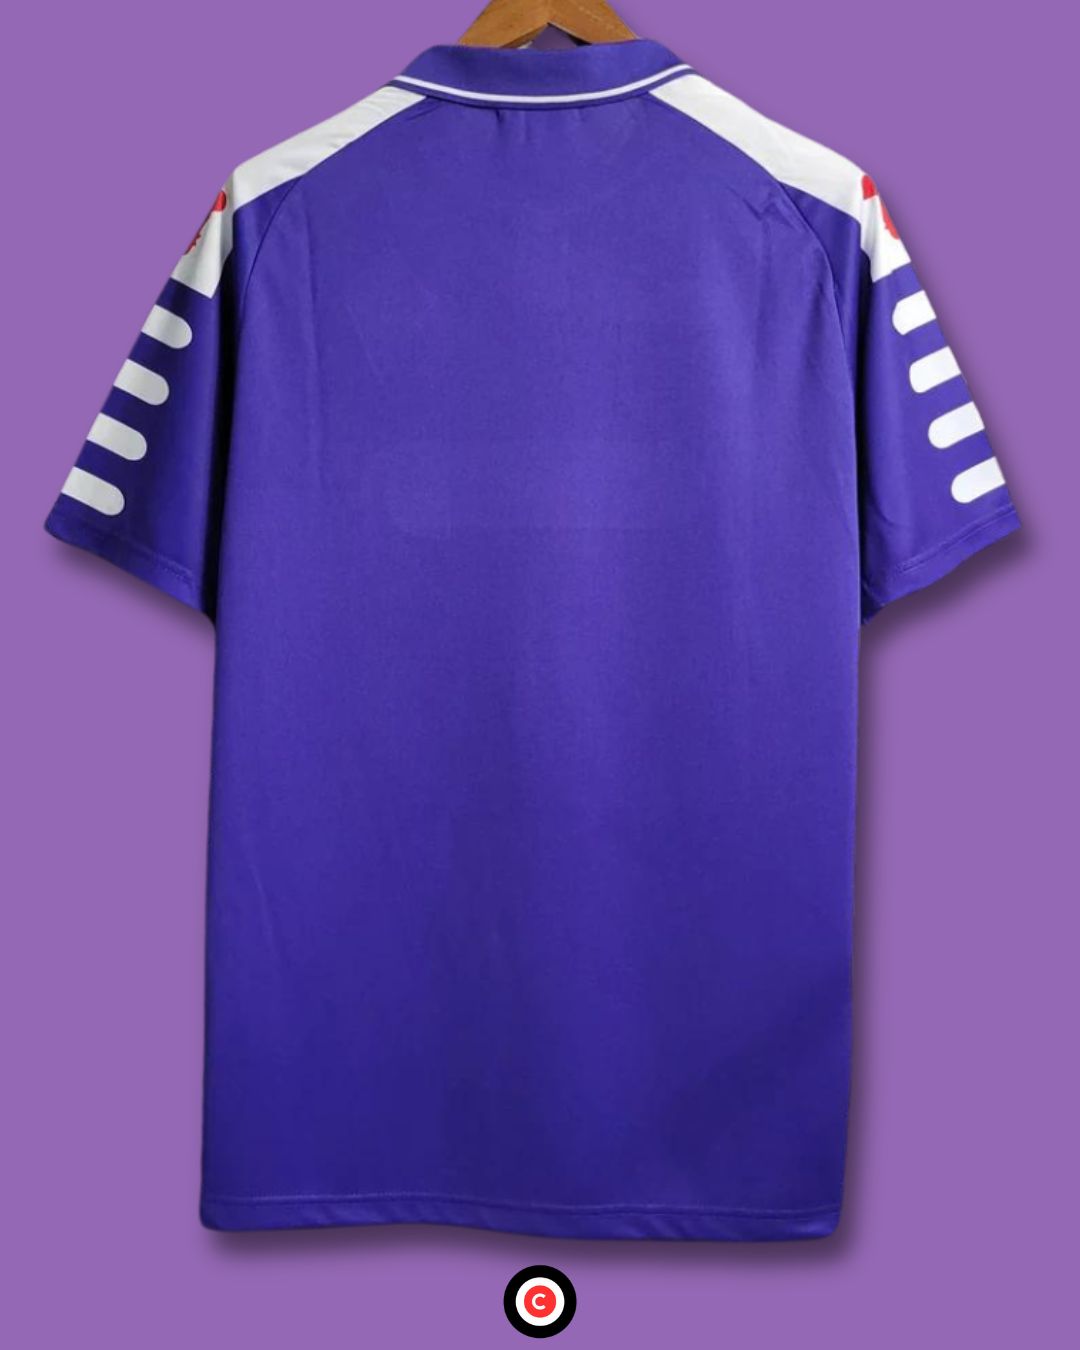 Fiorentina 1998/1999 (Home Kit) - Premium  from CatenaccioDesigns - Just €60.99! Shop now at CatenaccioDesigns